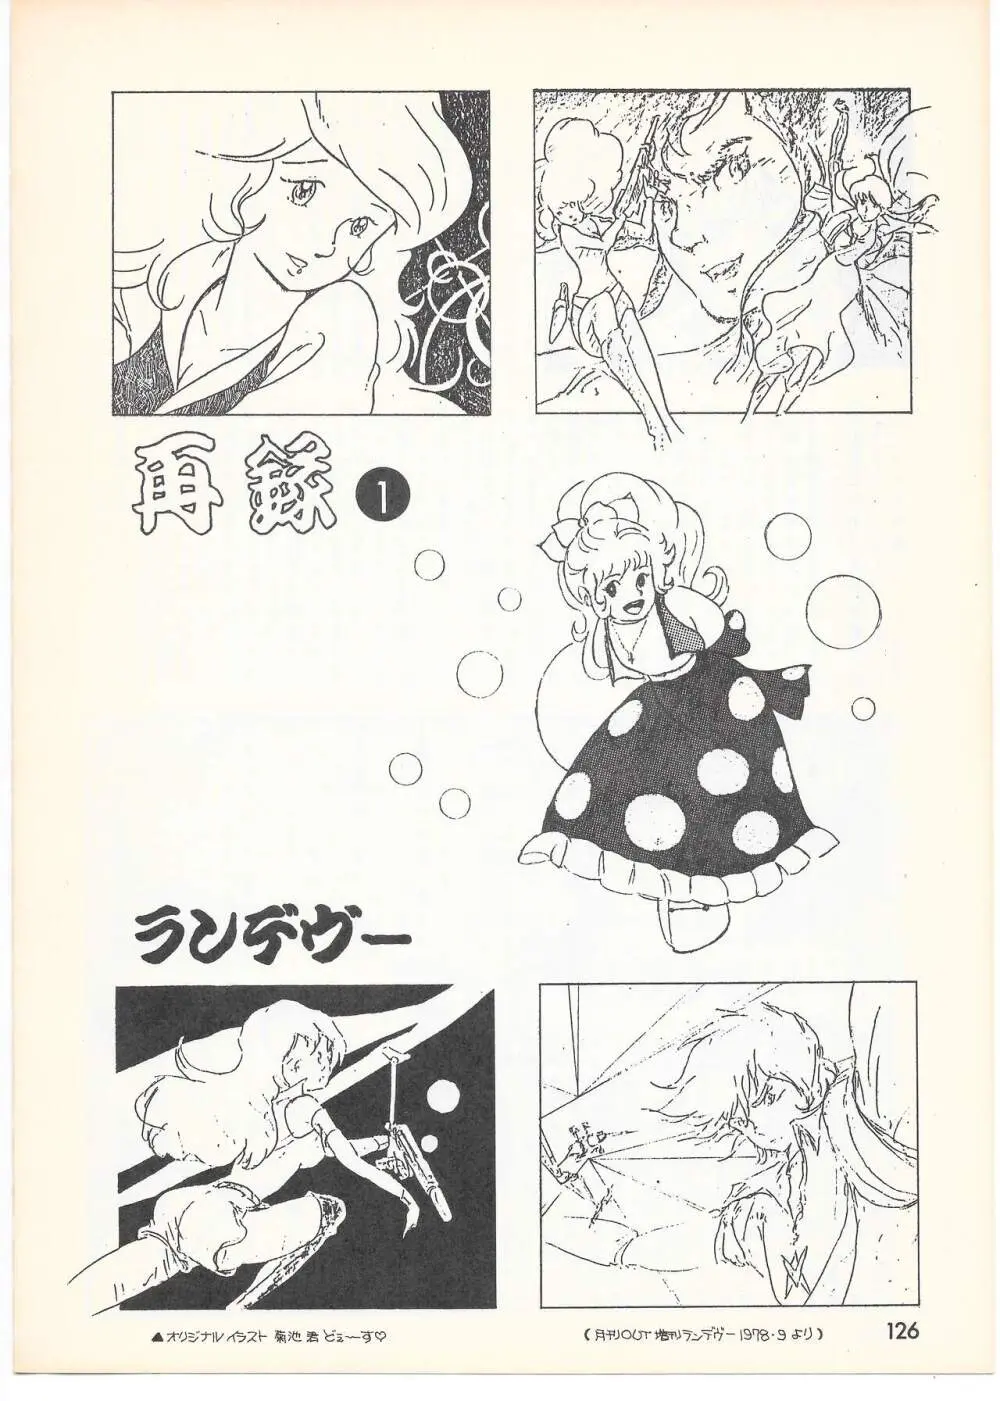 THE ANIMATOR 1 金田伊功特集号 - page121